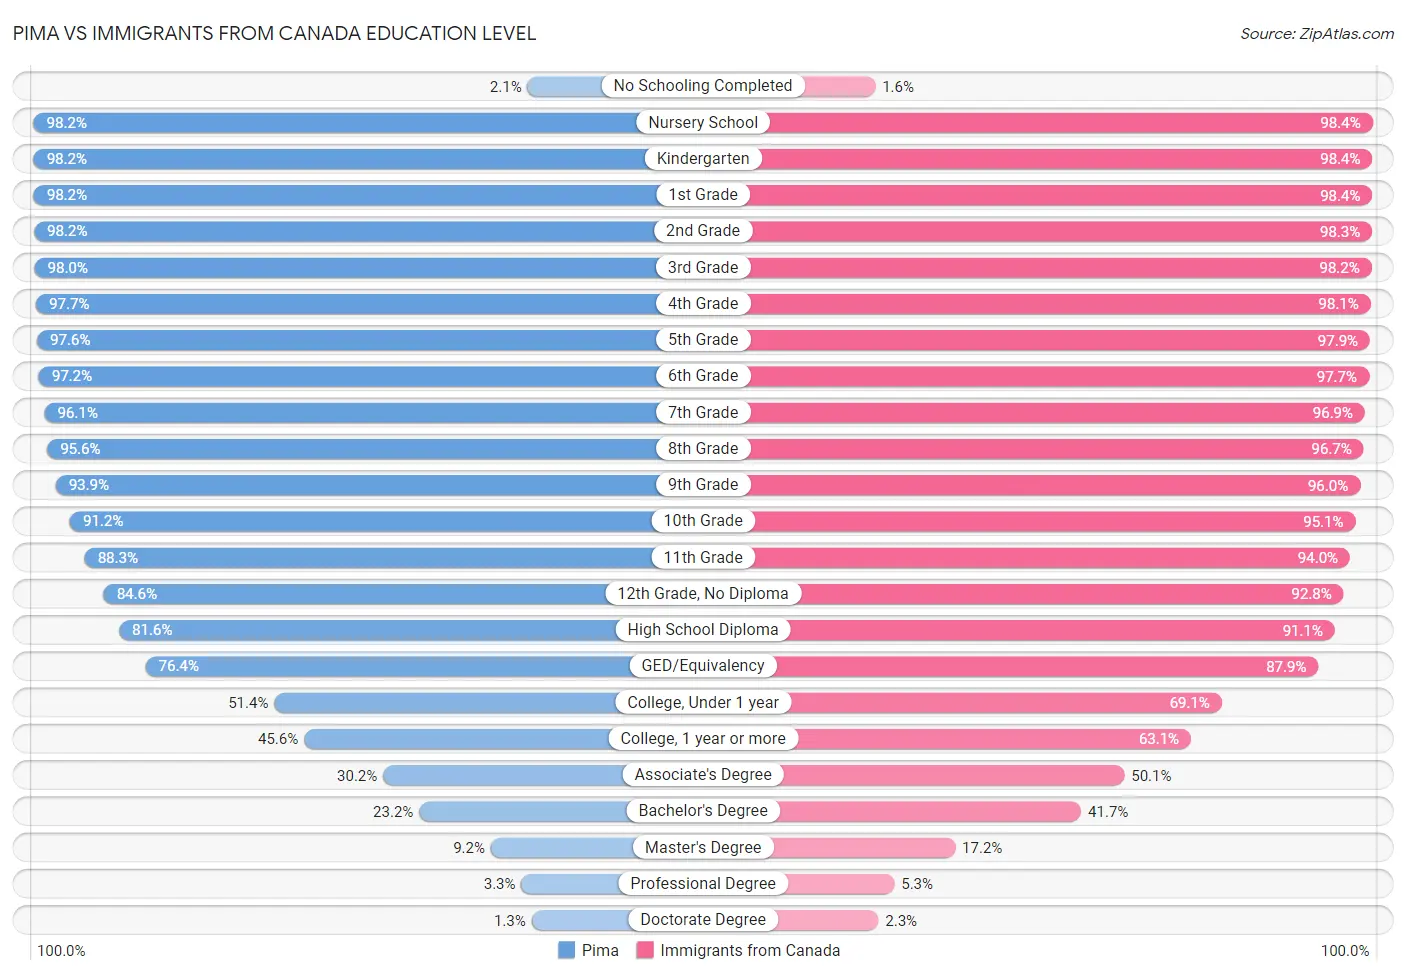 Pima vs Immigrants from Canada Education Level